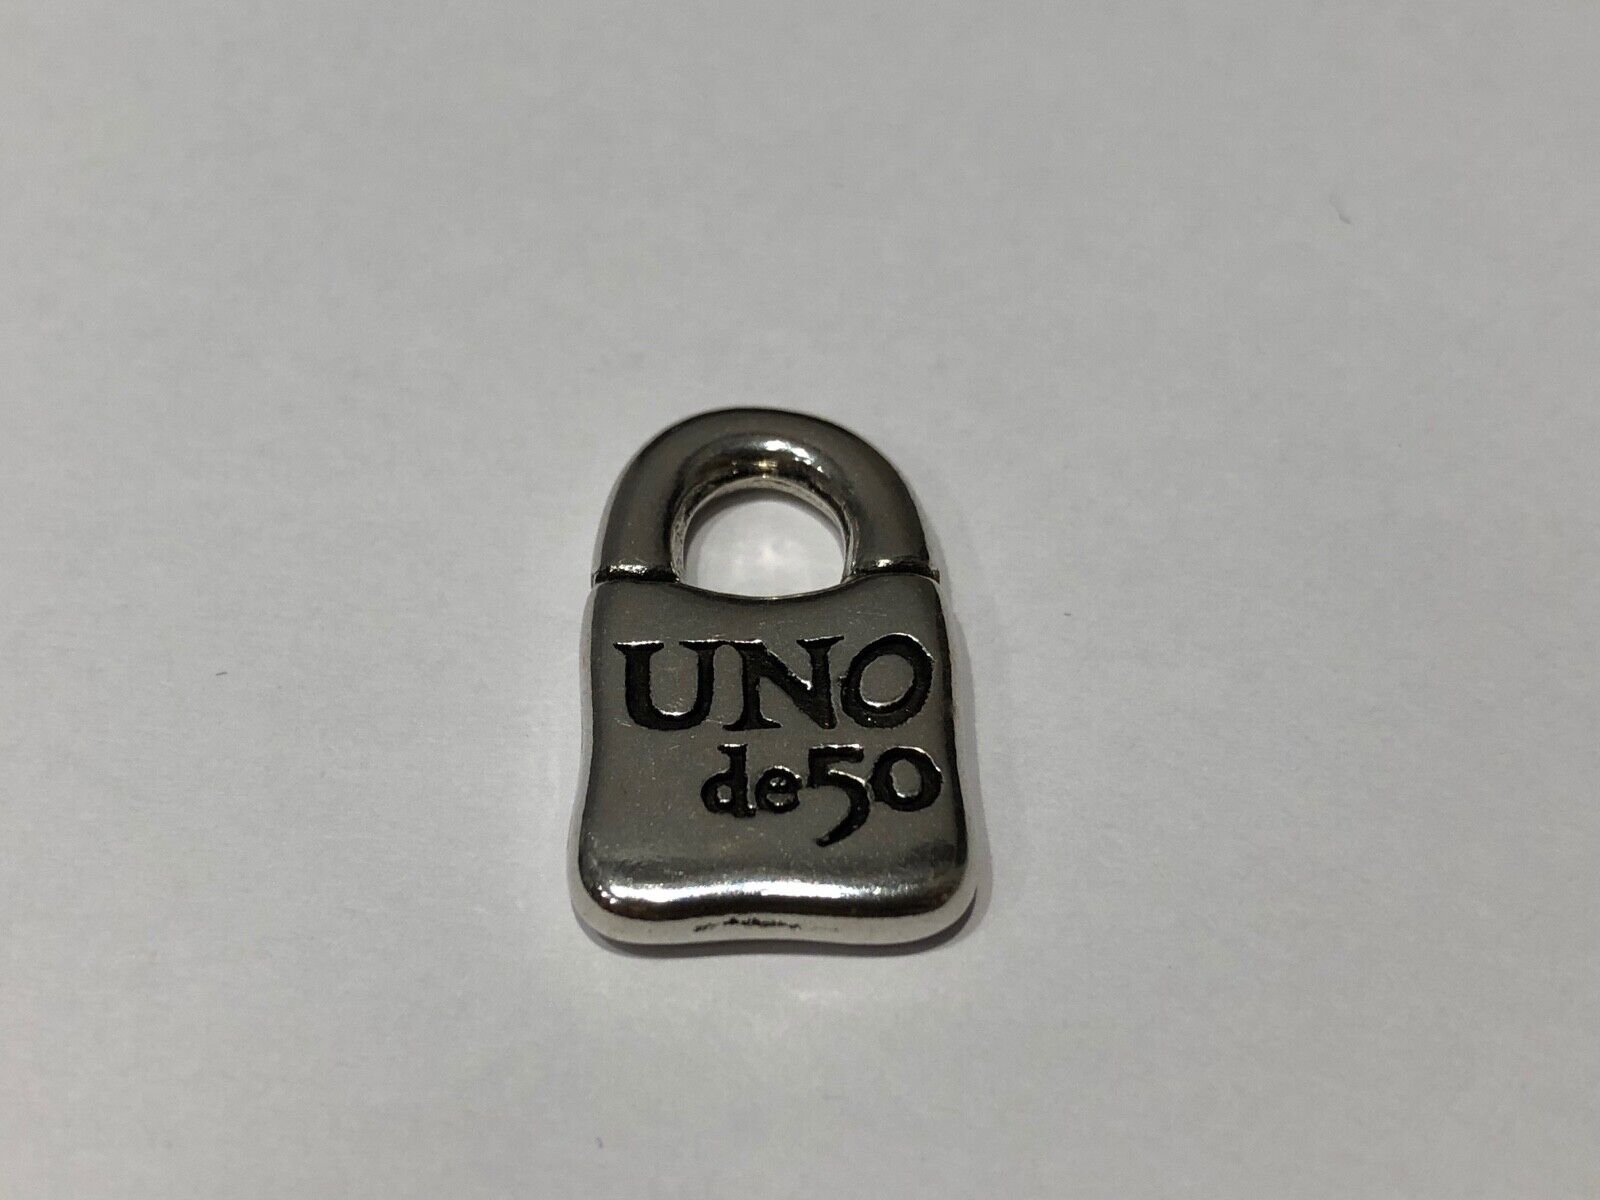 UNOde50 - Perle de Verre Pendentif - Cadenas Serrure - Métal - 24 MM X 14 MM